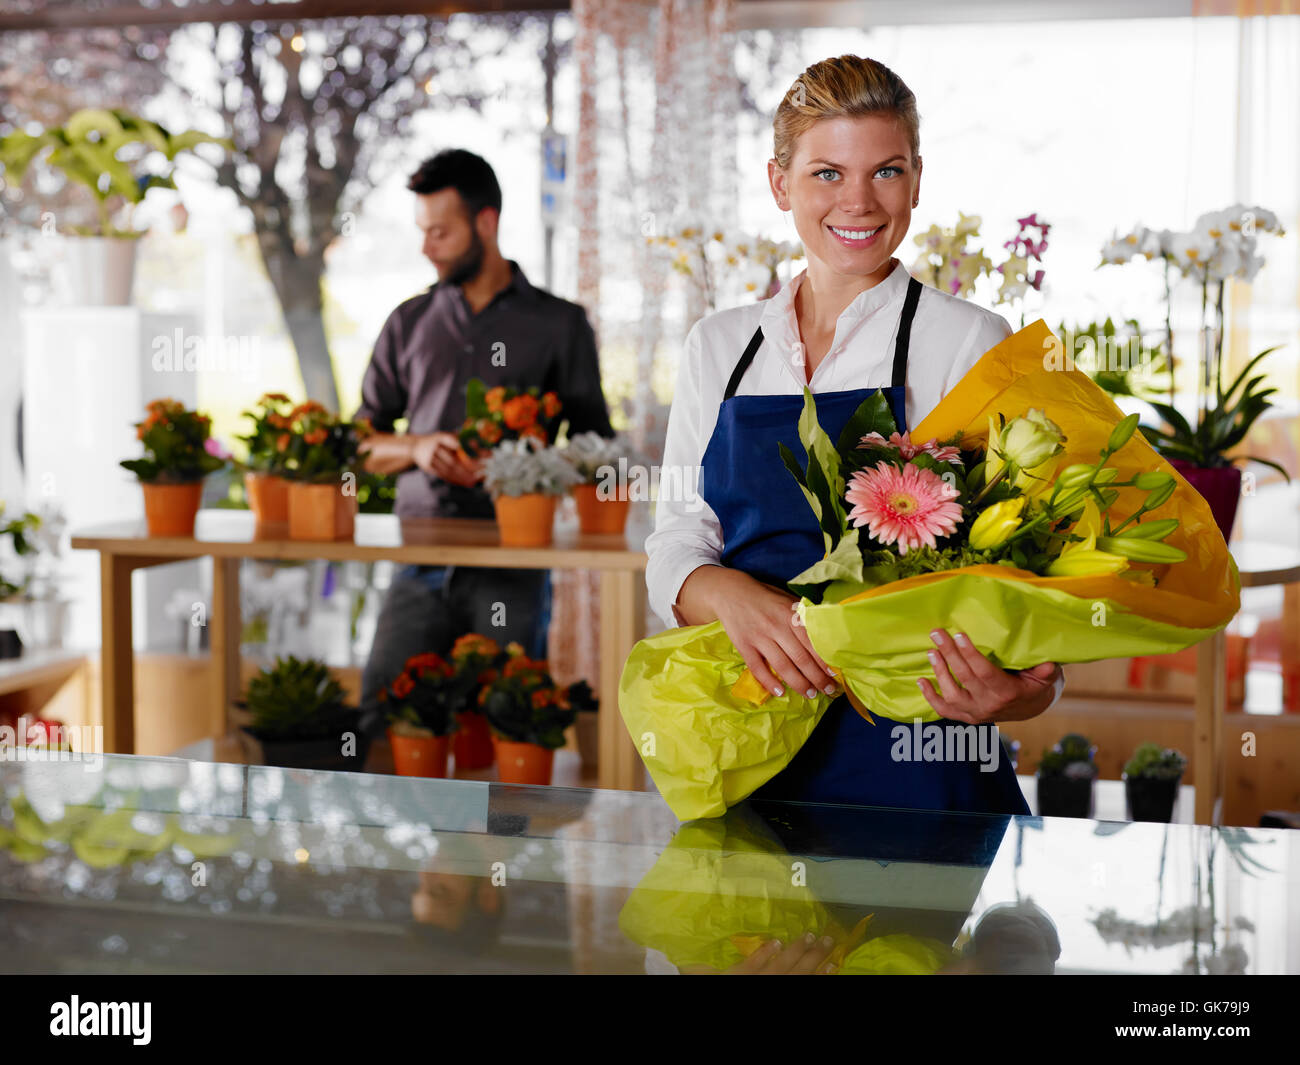 woman flower plant Stock Photo